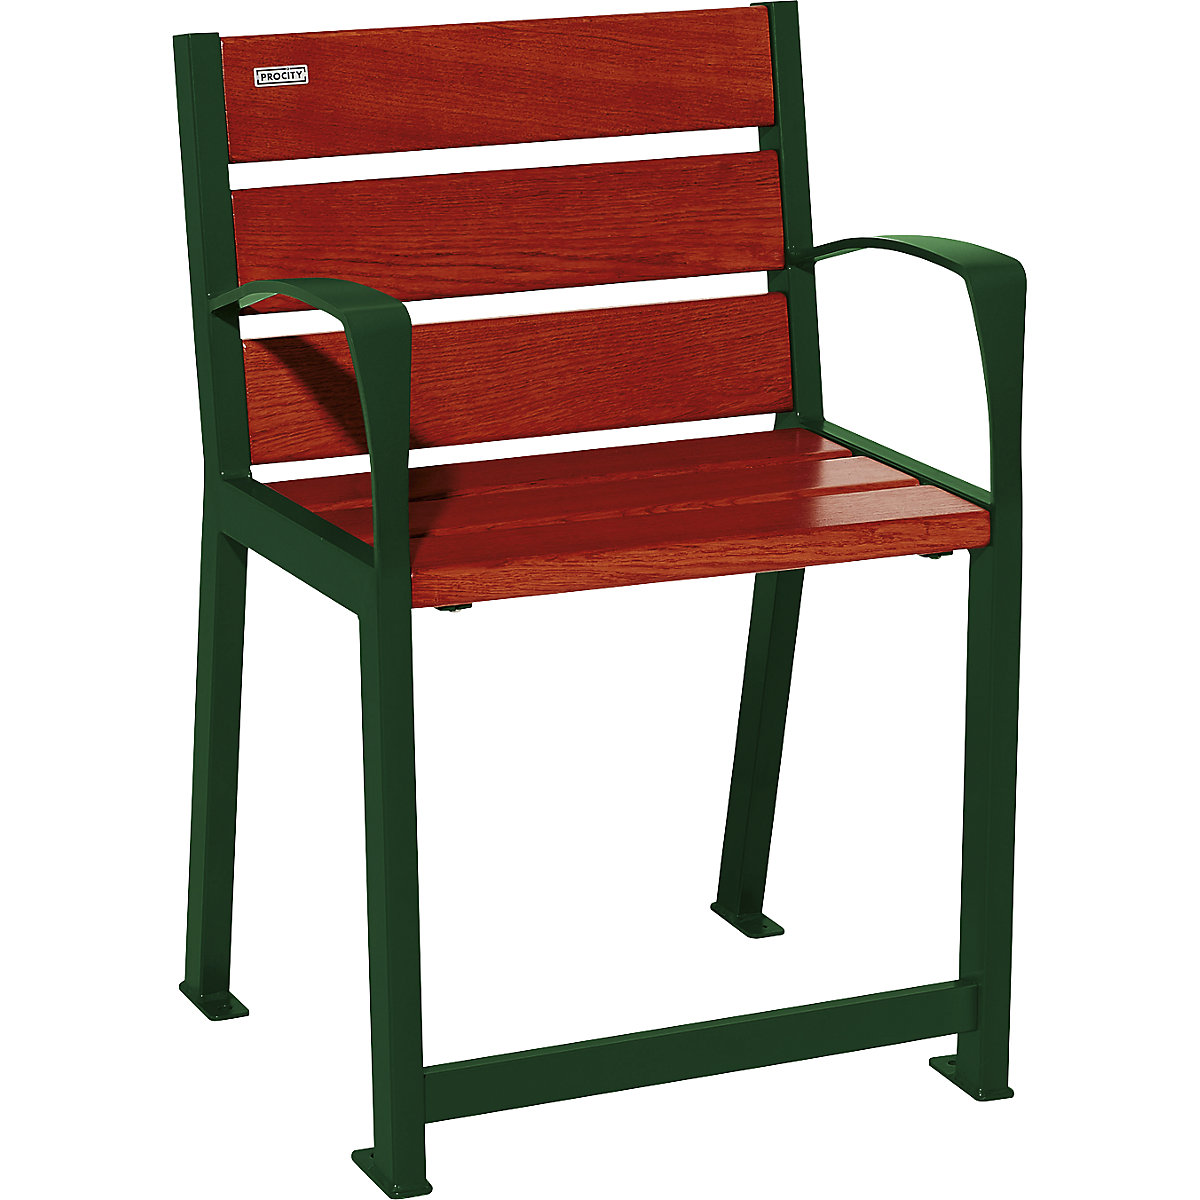 SILAOS® chair made of wood – PROCITY